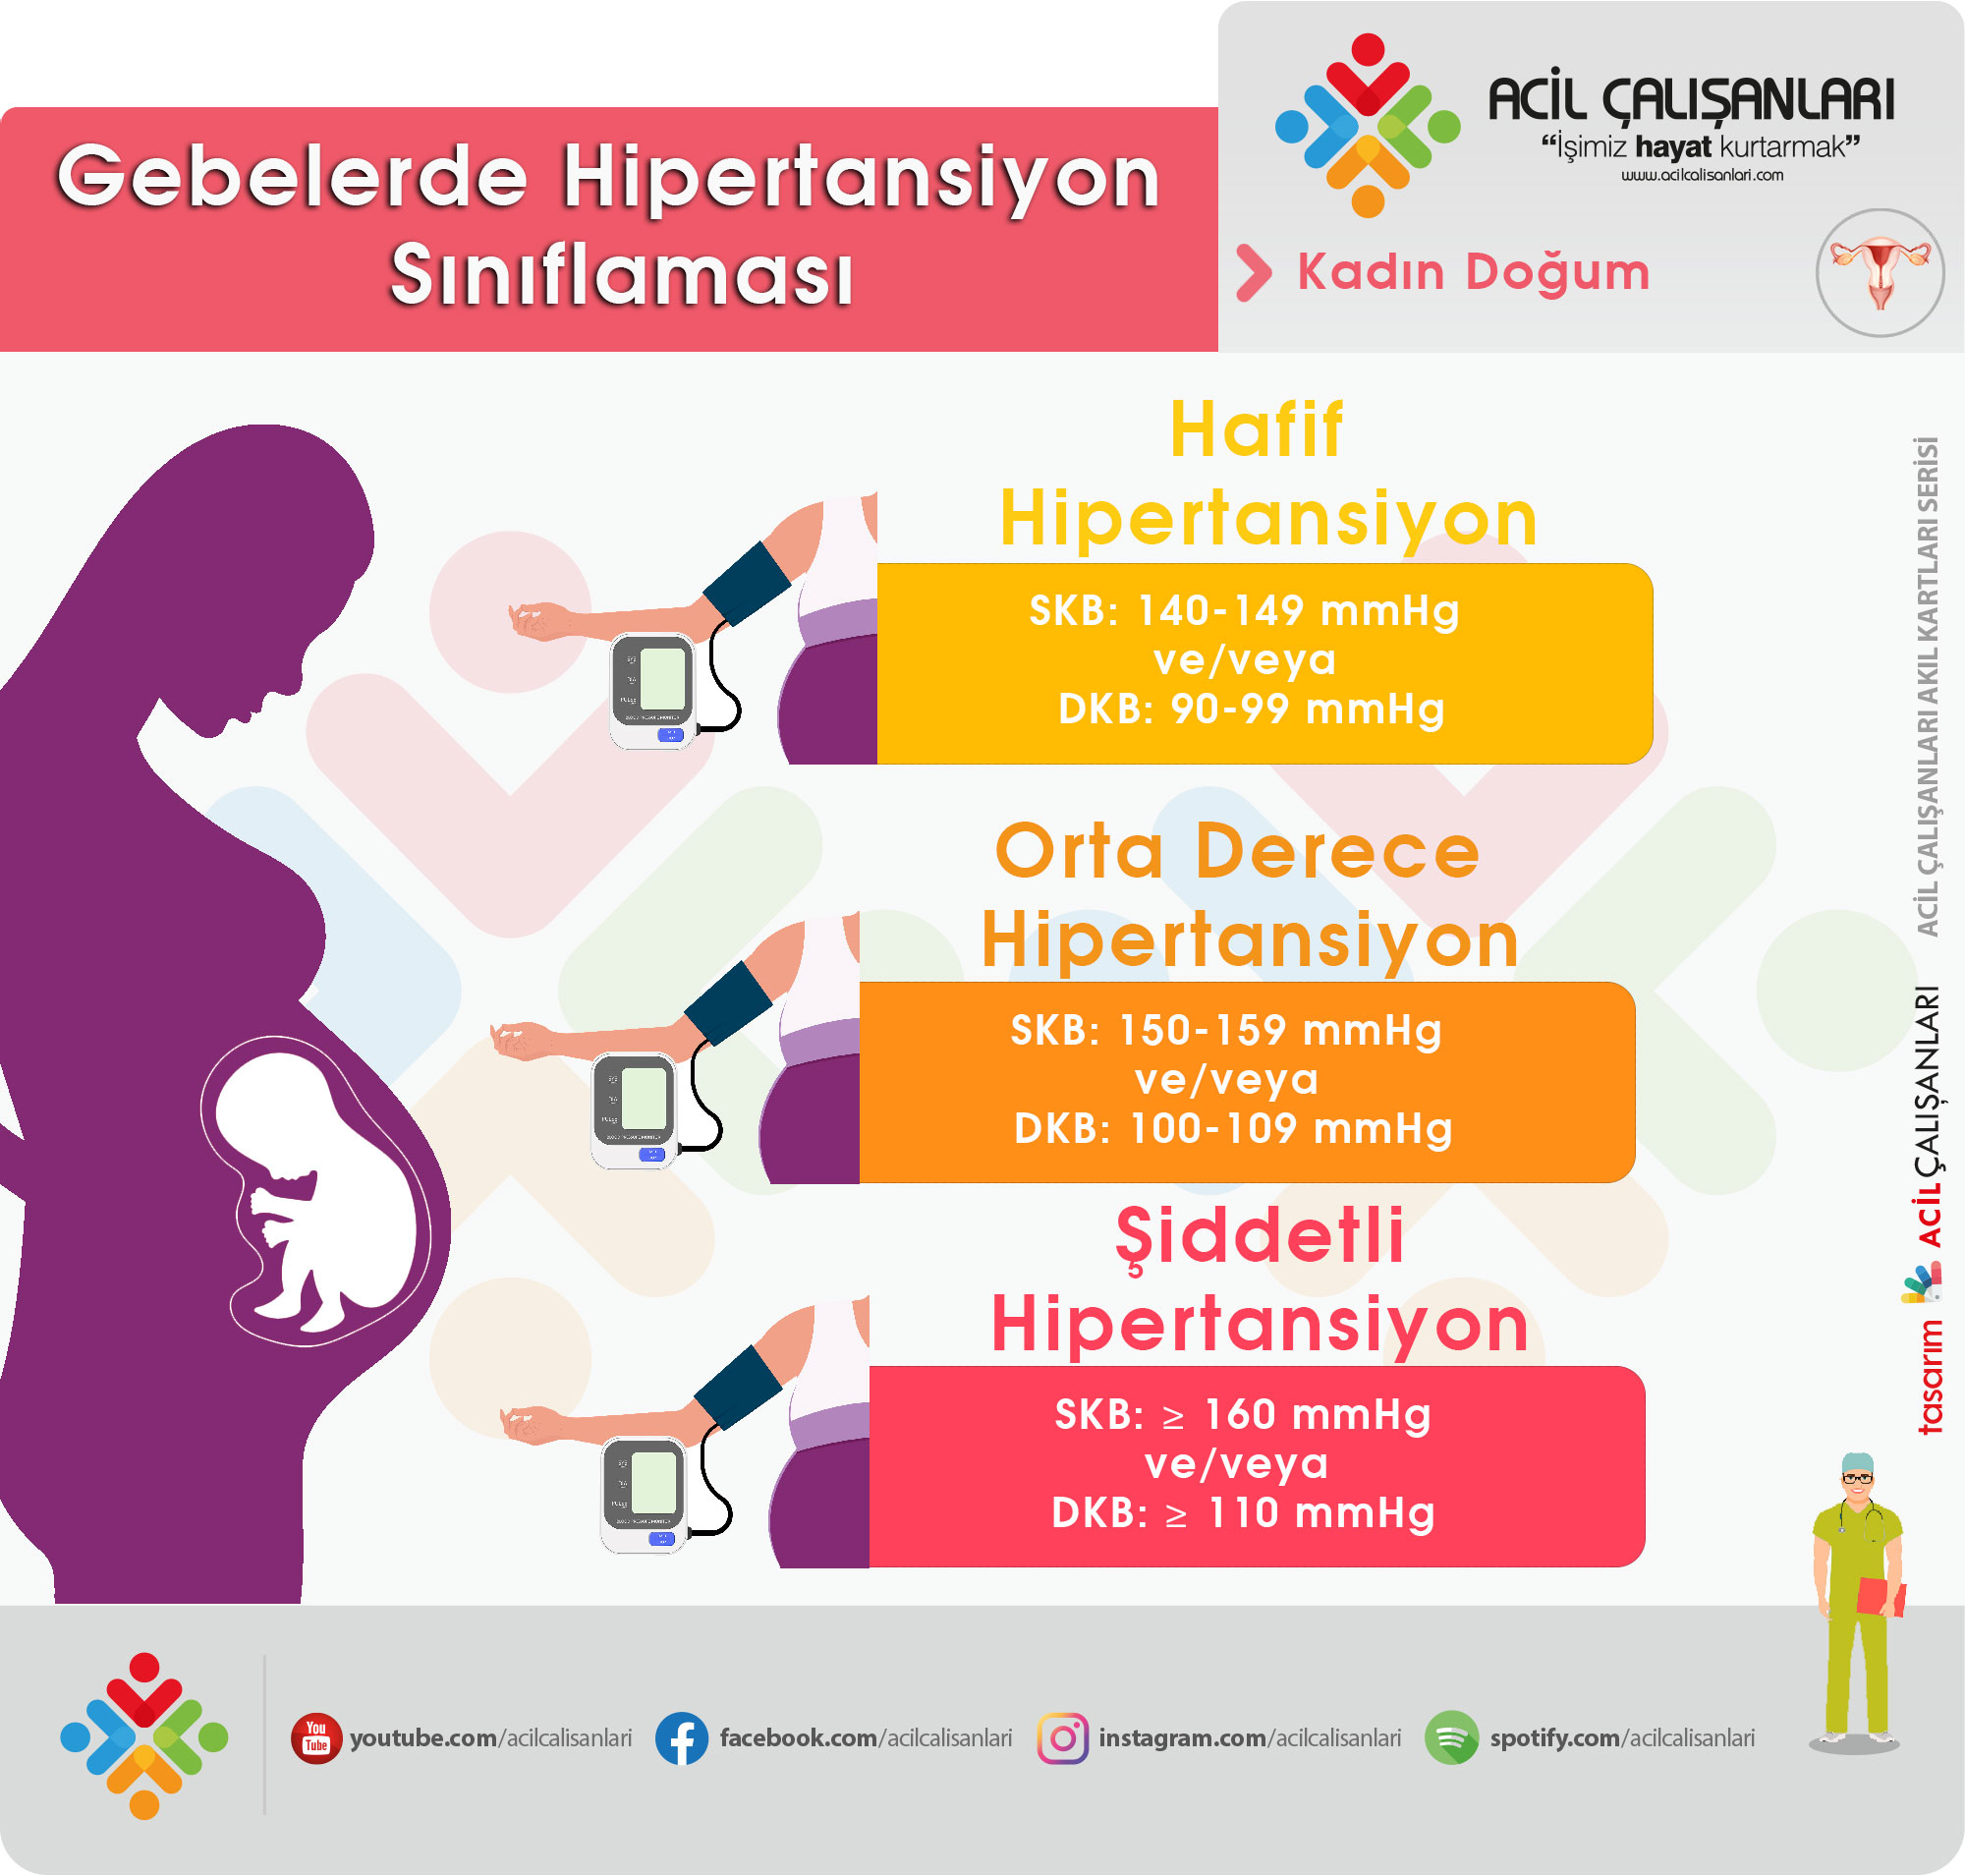 Fetal hipertansiyon nedir?